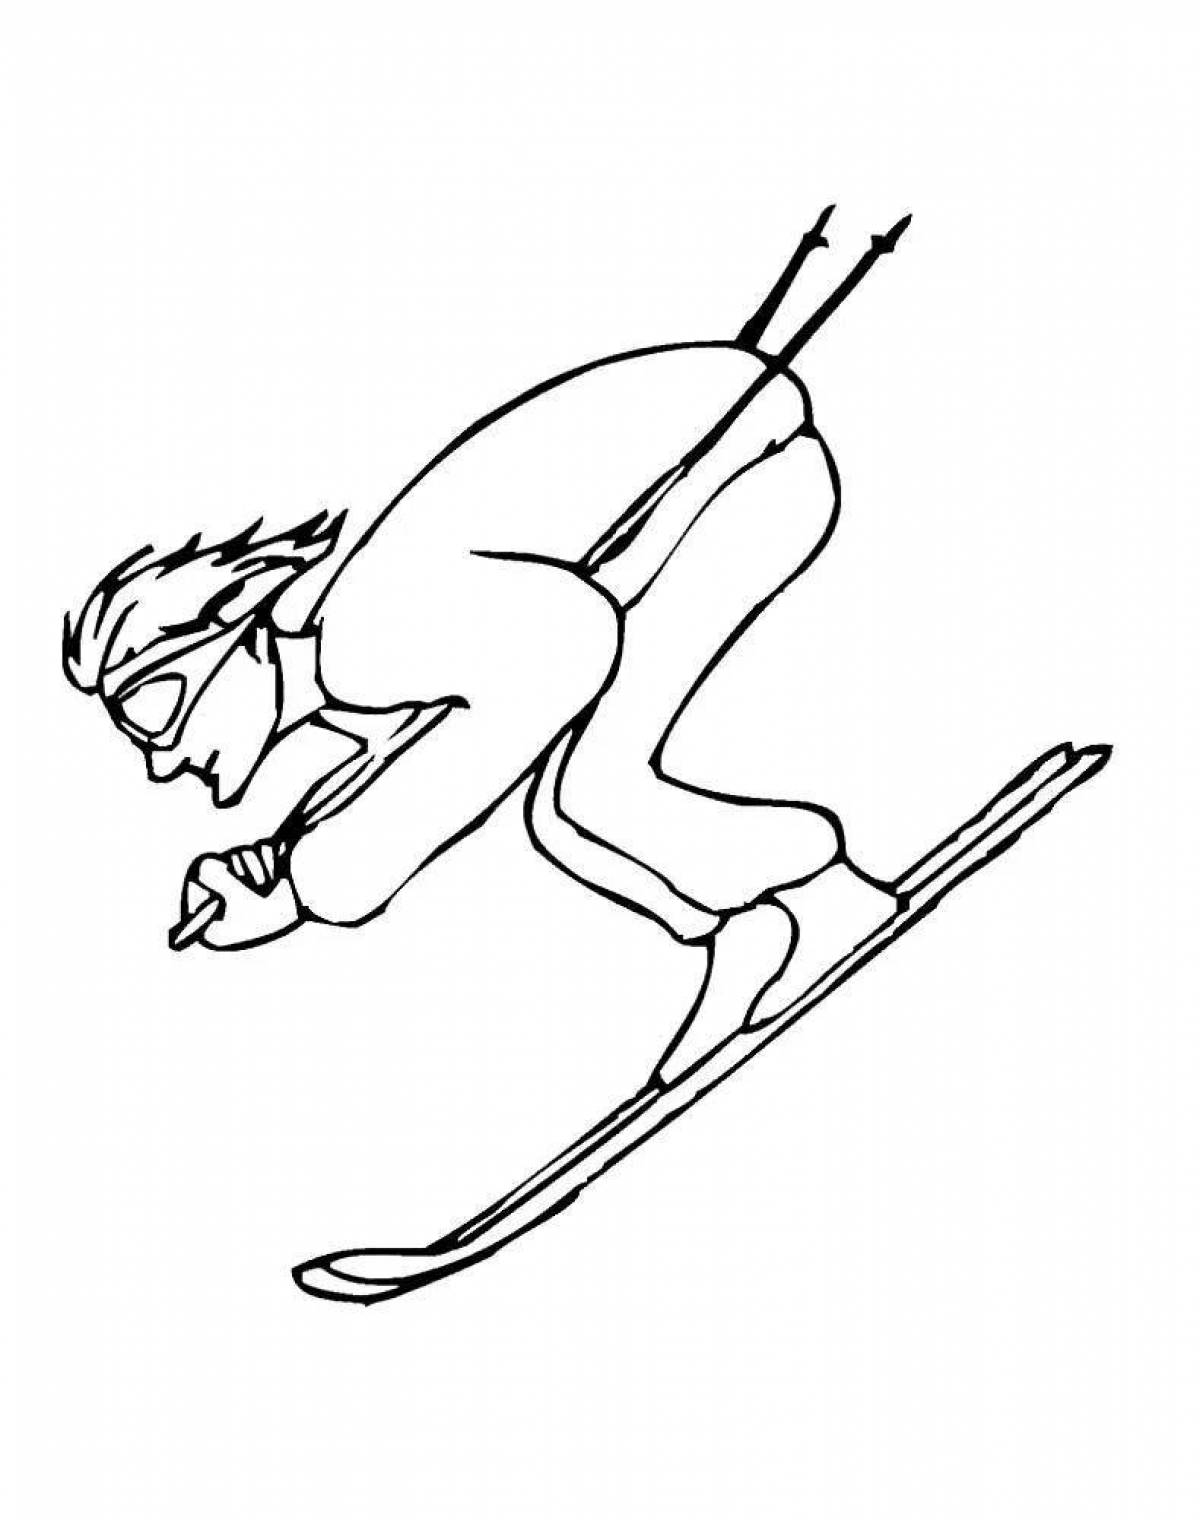 Striking coloring book for ski jumping